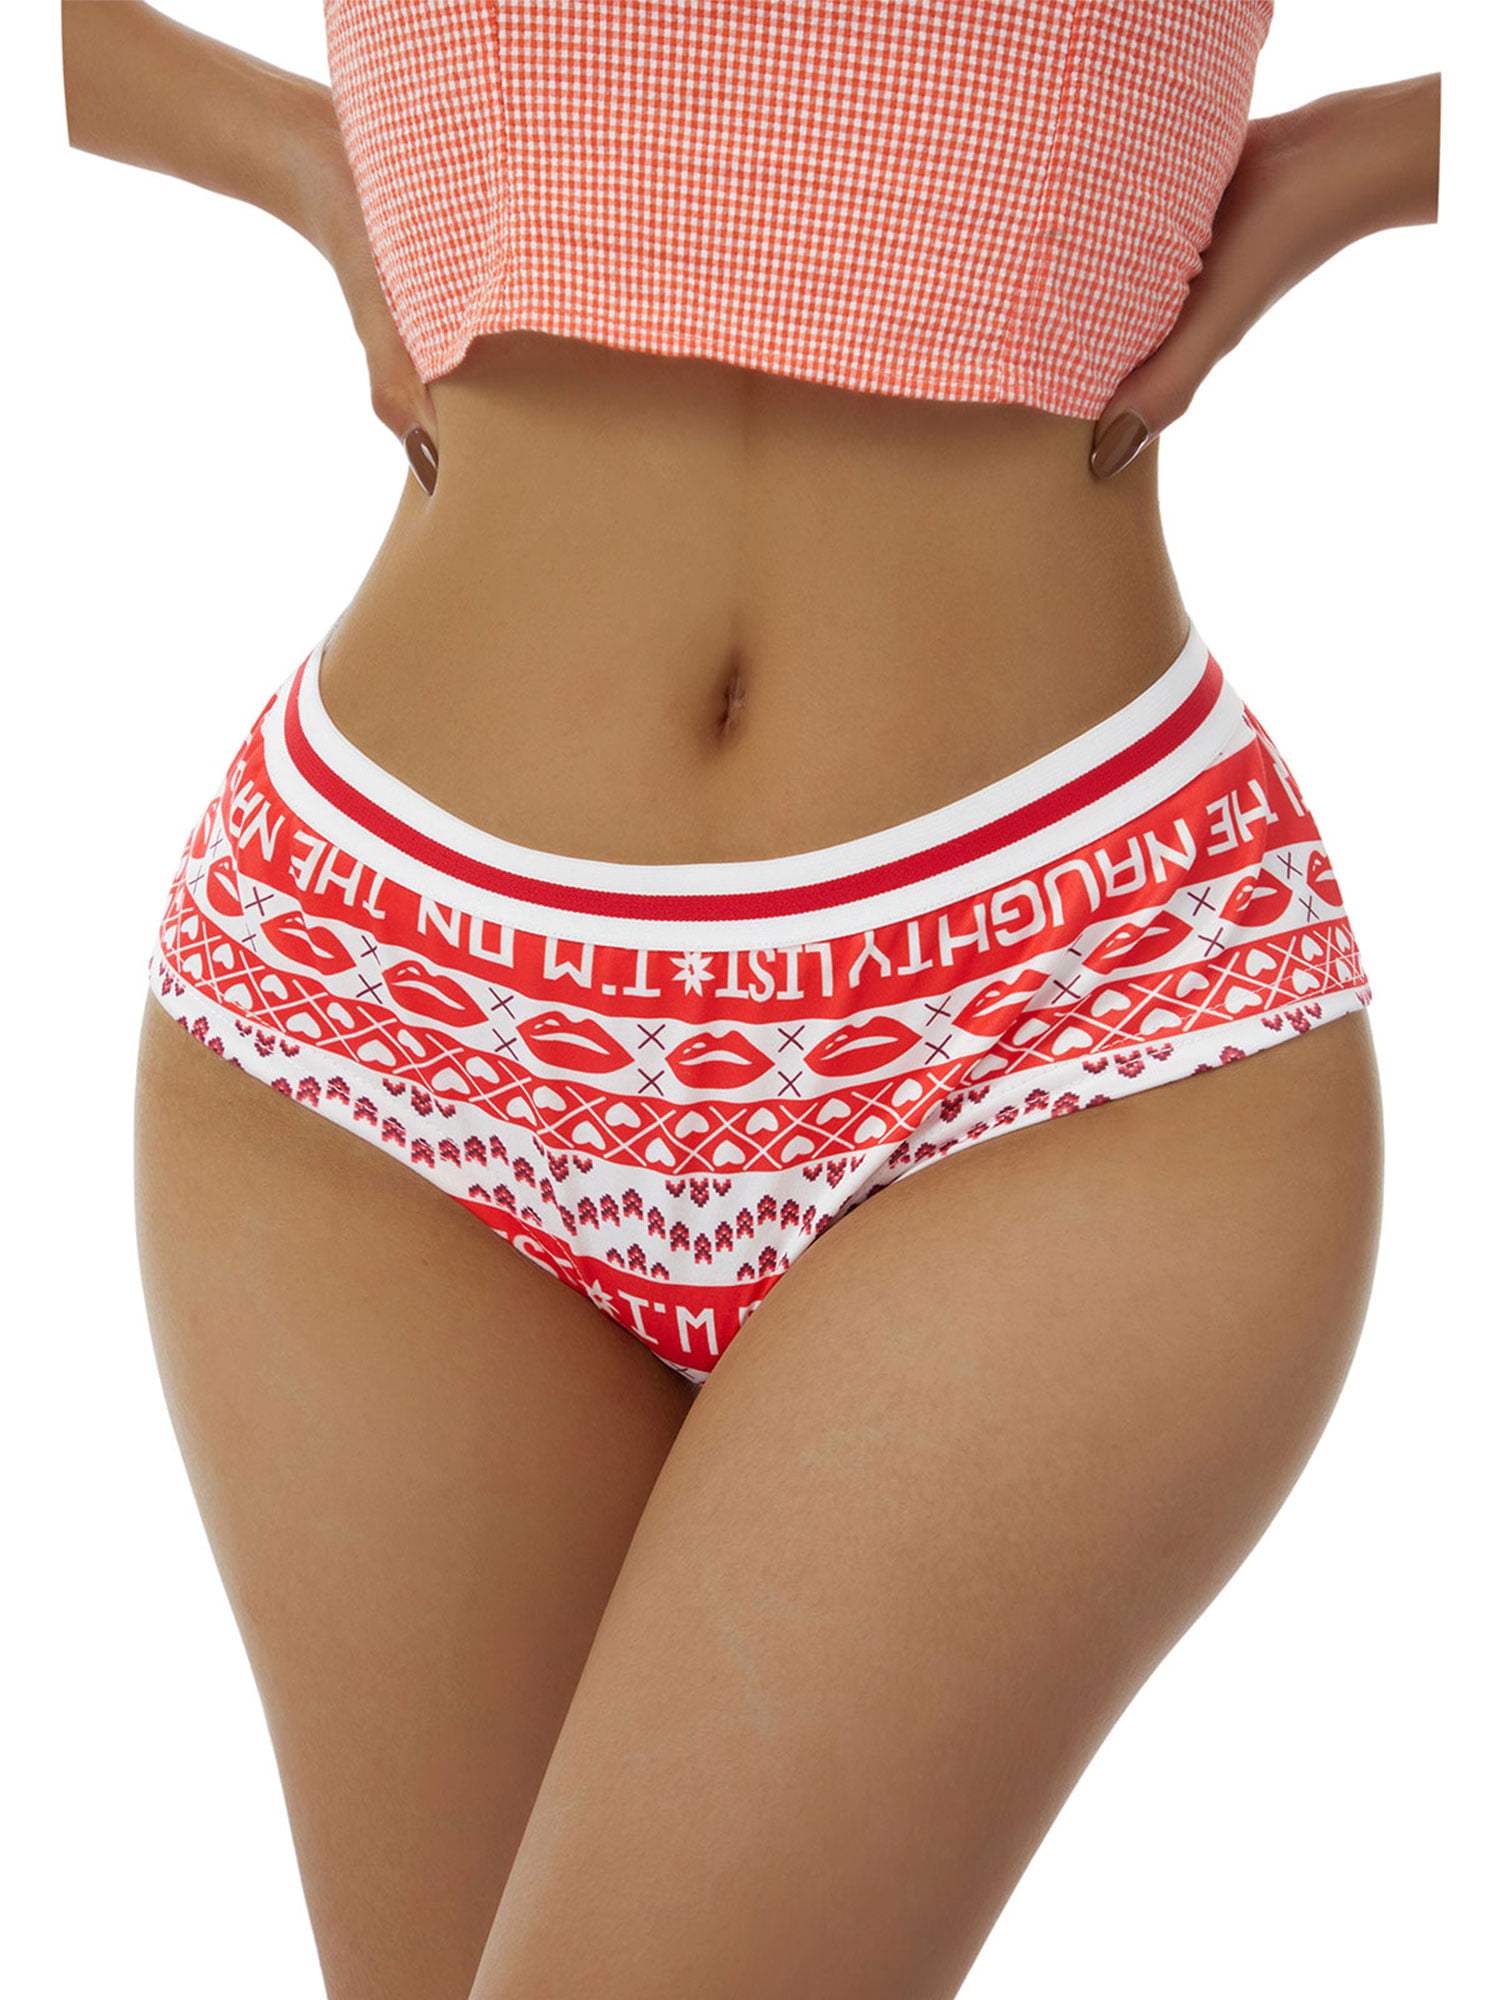 RUDOLPH the RED NOSE REINDEER ~ Ladies Women's Panties Underwear ~  S M L XL 